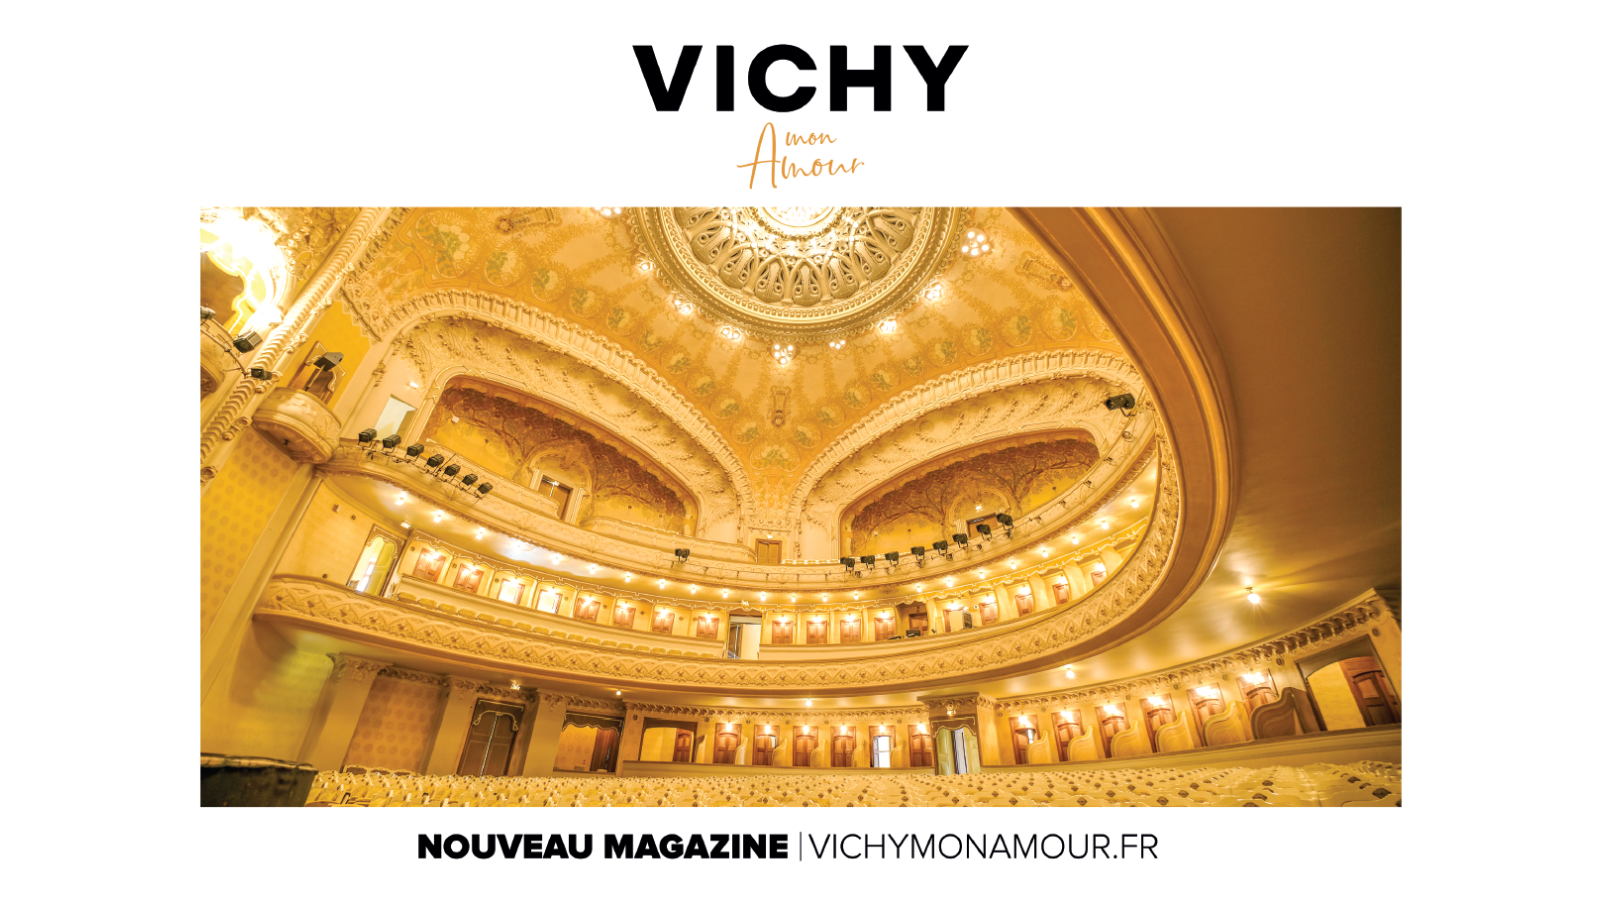 Vichy valorise son magazine